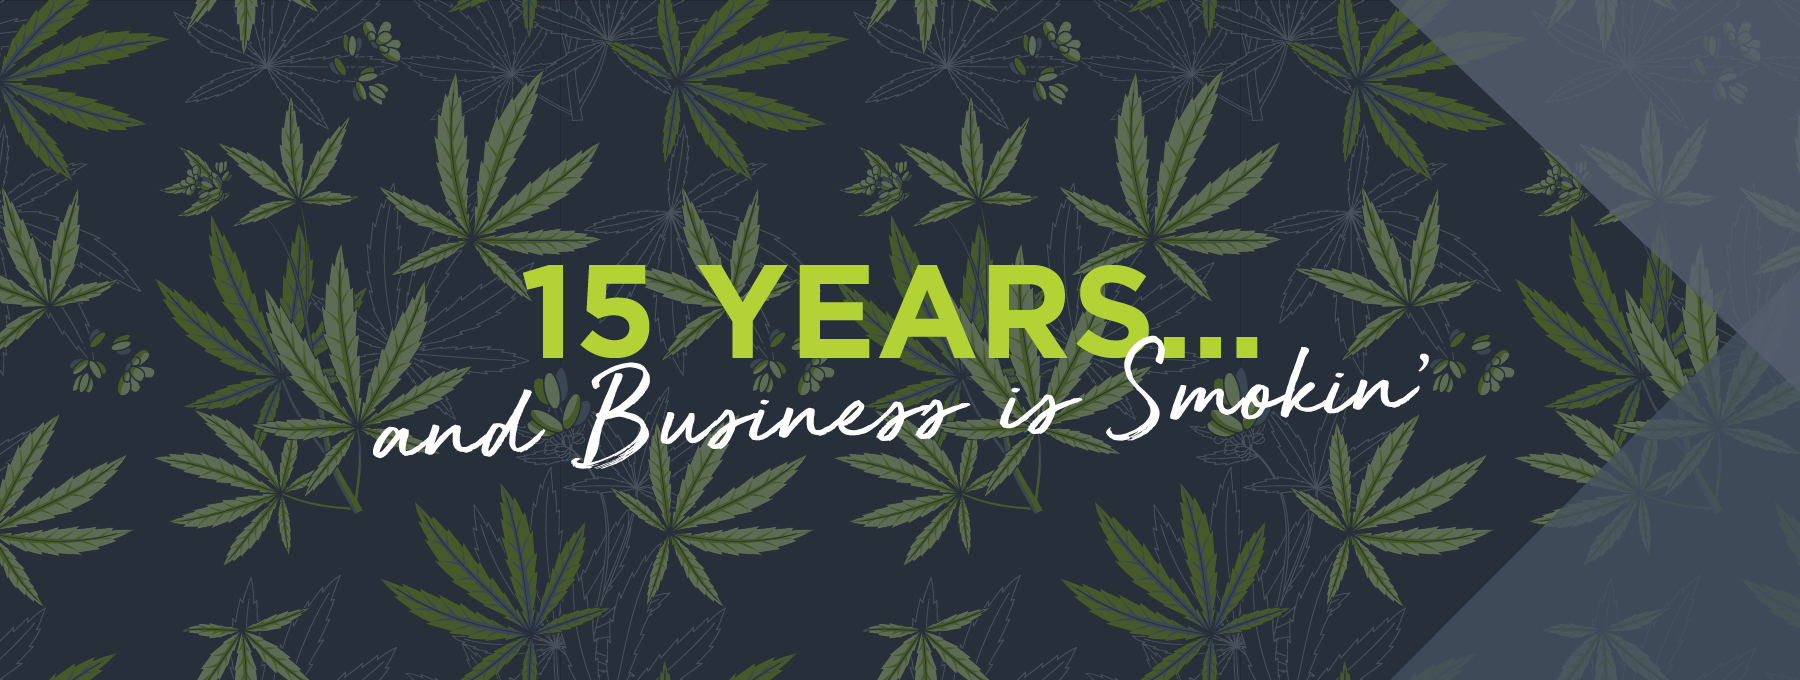 15 Years and business be smokin'